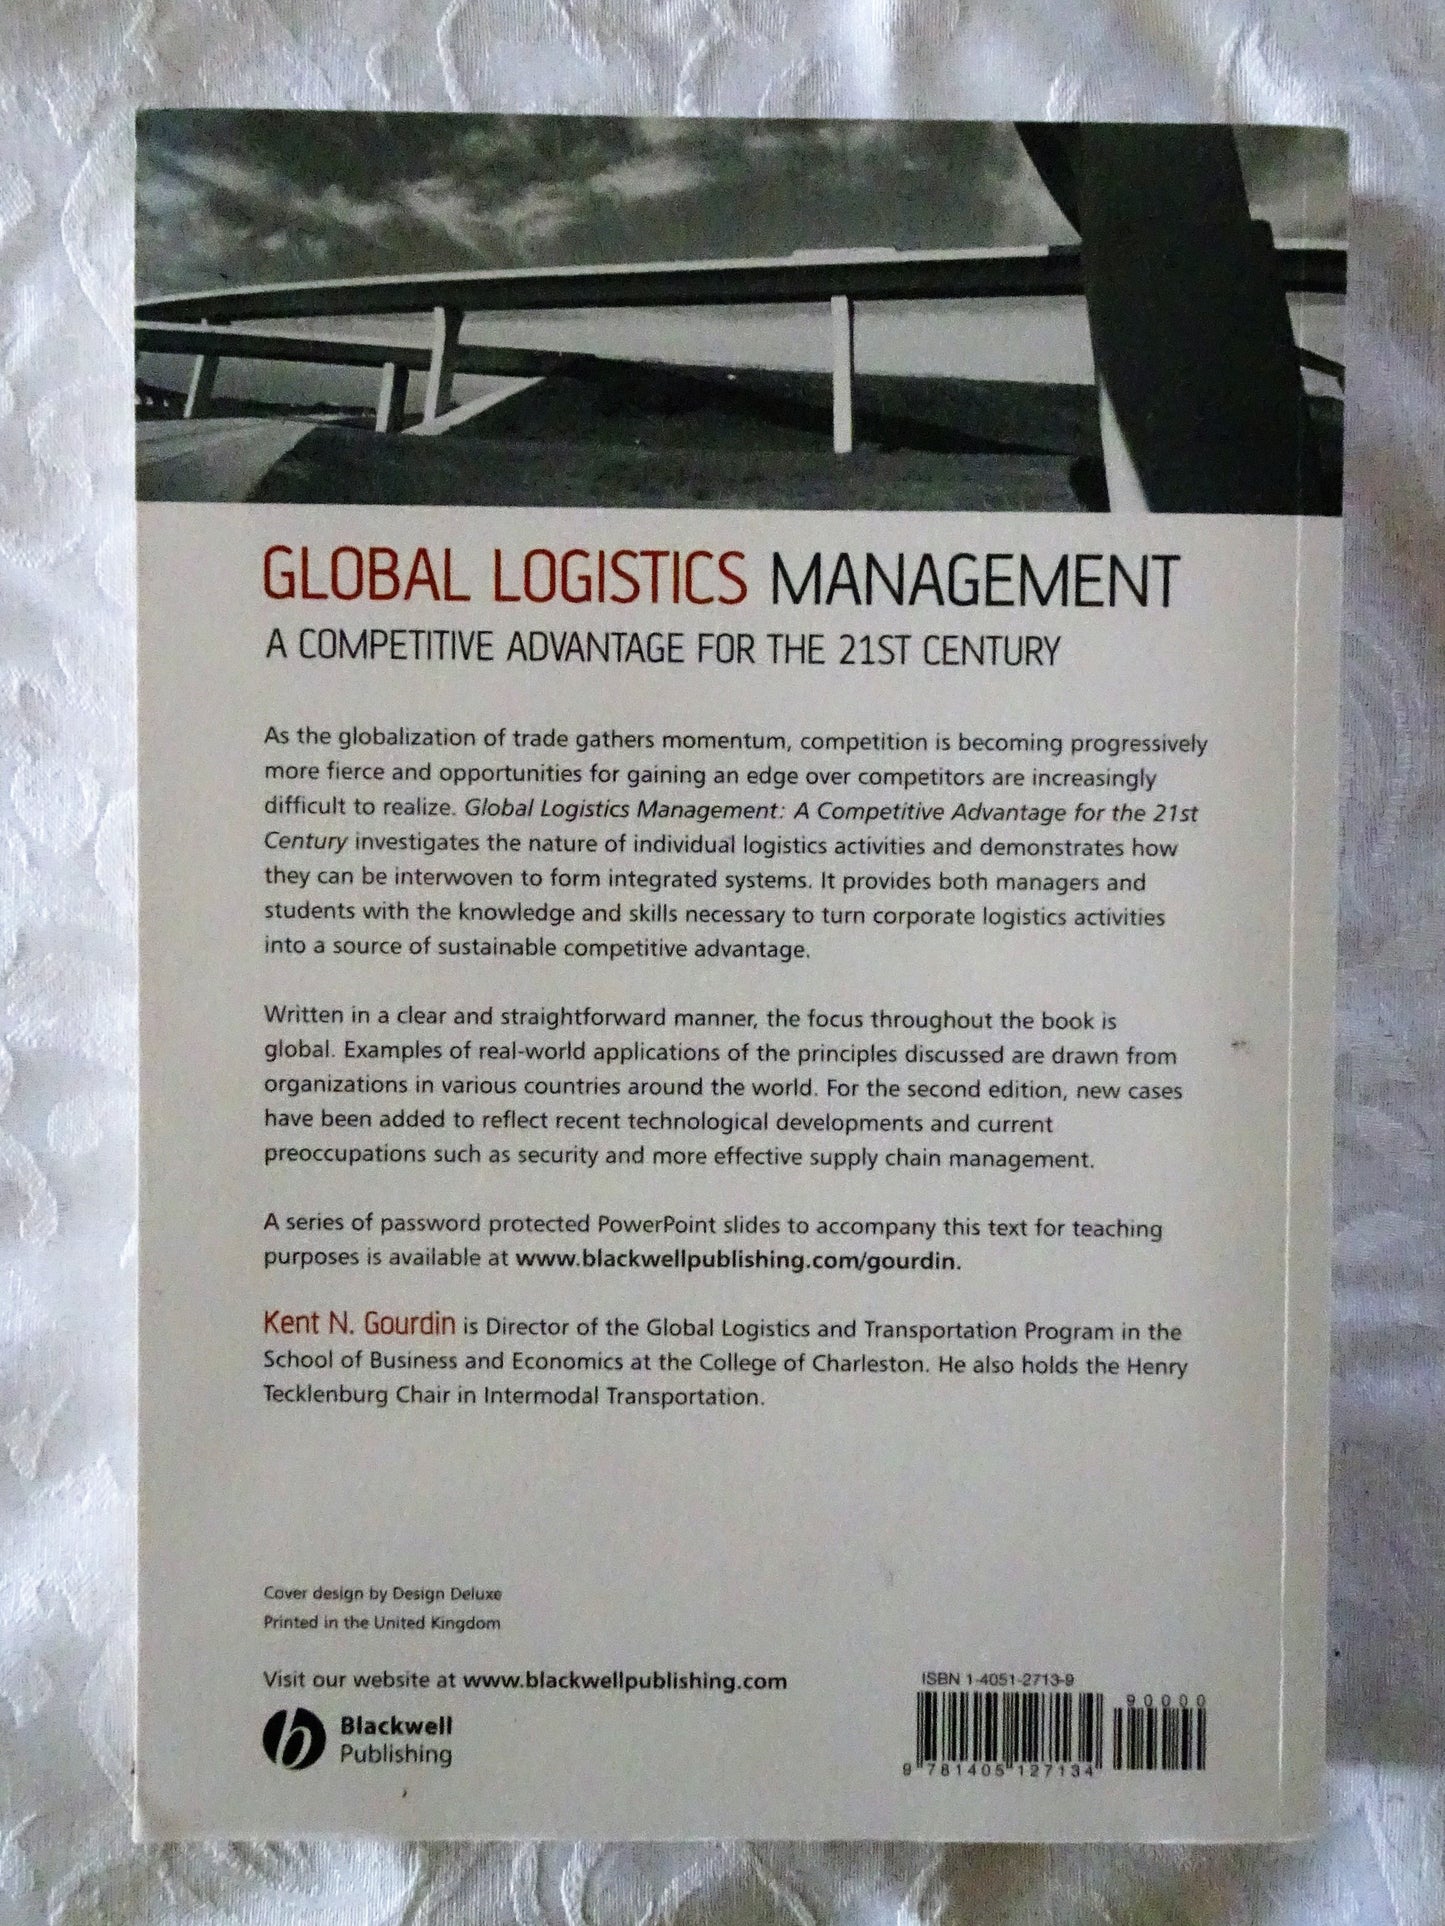 Global Logistics Management by Kent N. Gourdin